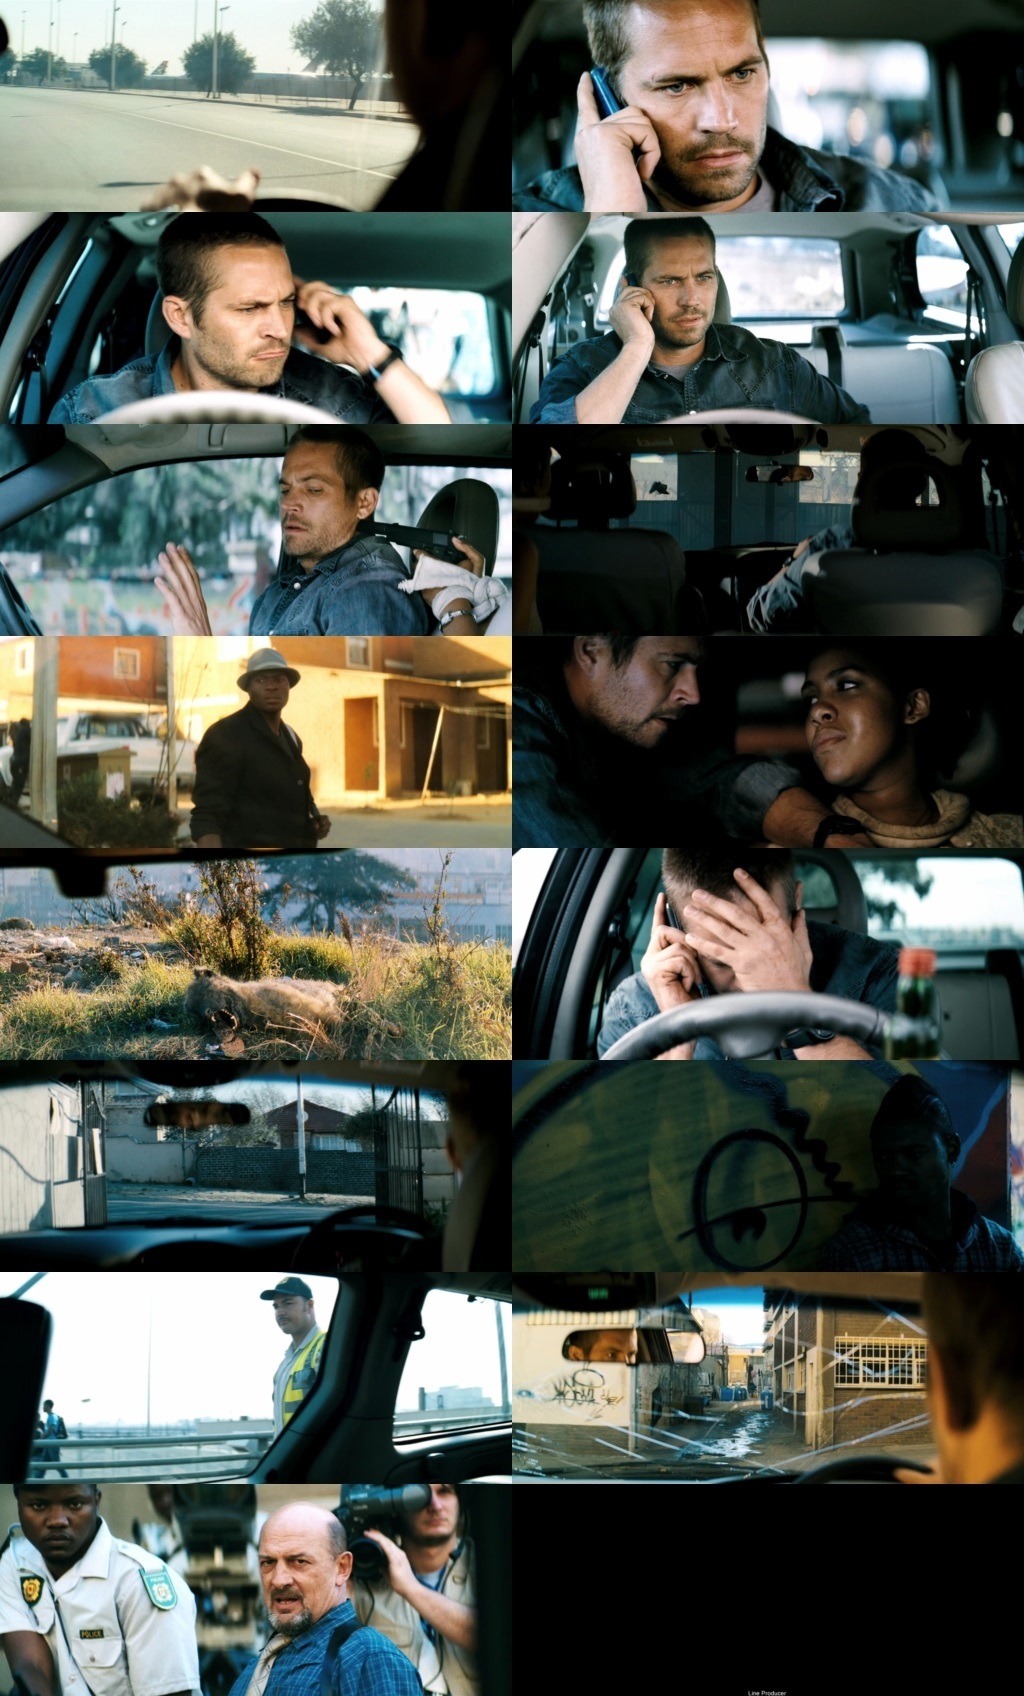  Screenshot Of Vehicle-19-2013-BluRay-Dual-Audio-Hindi-And-English-Hollywood-Hindi-Dubbed-Full-Movie-Download-In-Hd